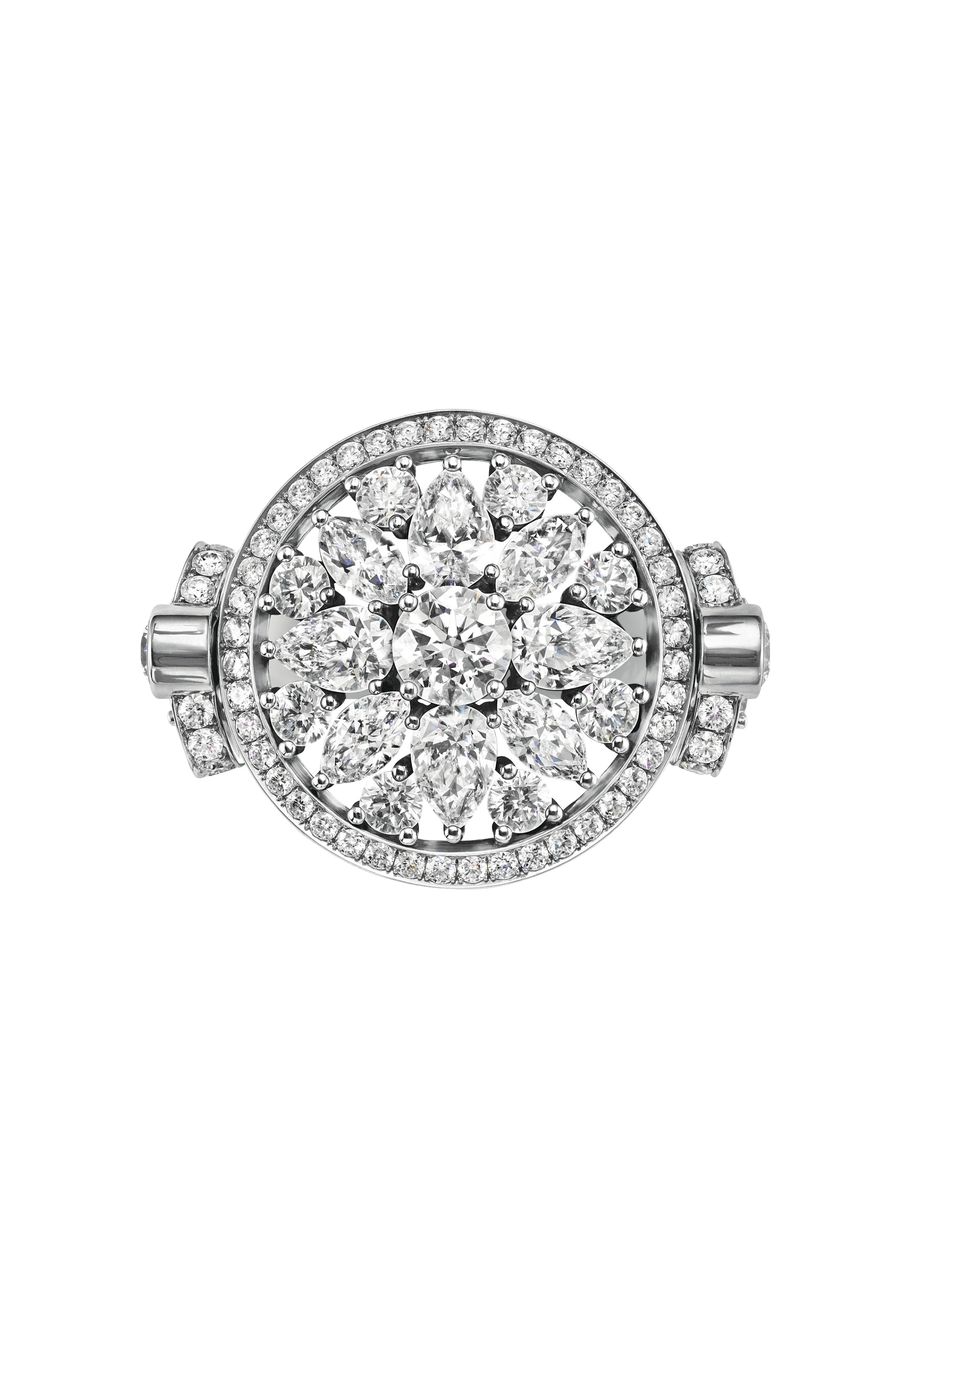 Diamond, Ring, Jewellery, Engagement ring, Fashion accessory, Platinum, Gemstone, Body jewelry, Metal, Silver, 